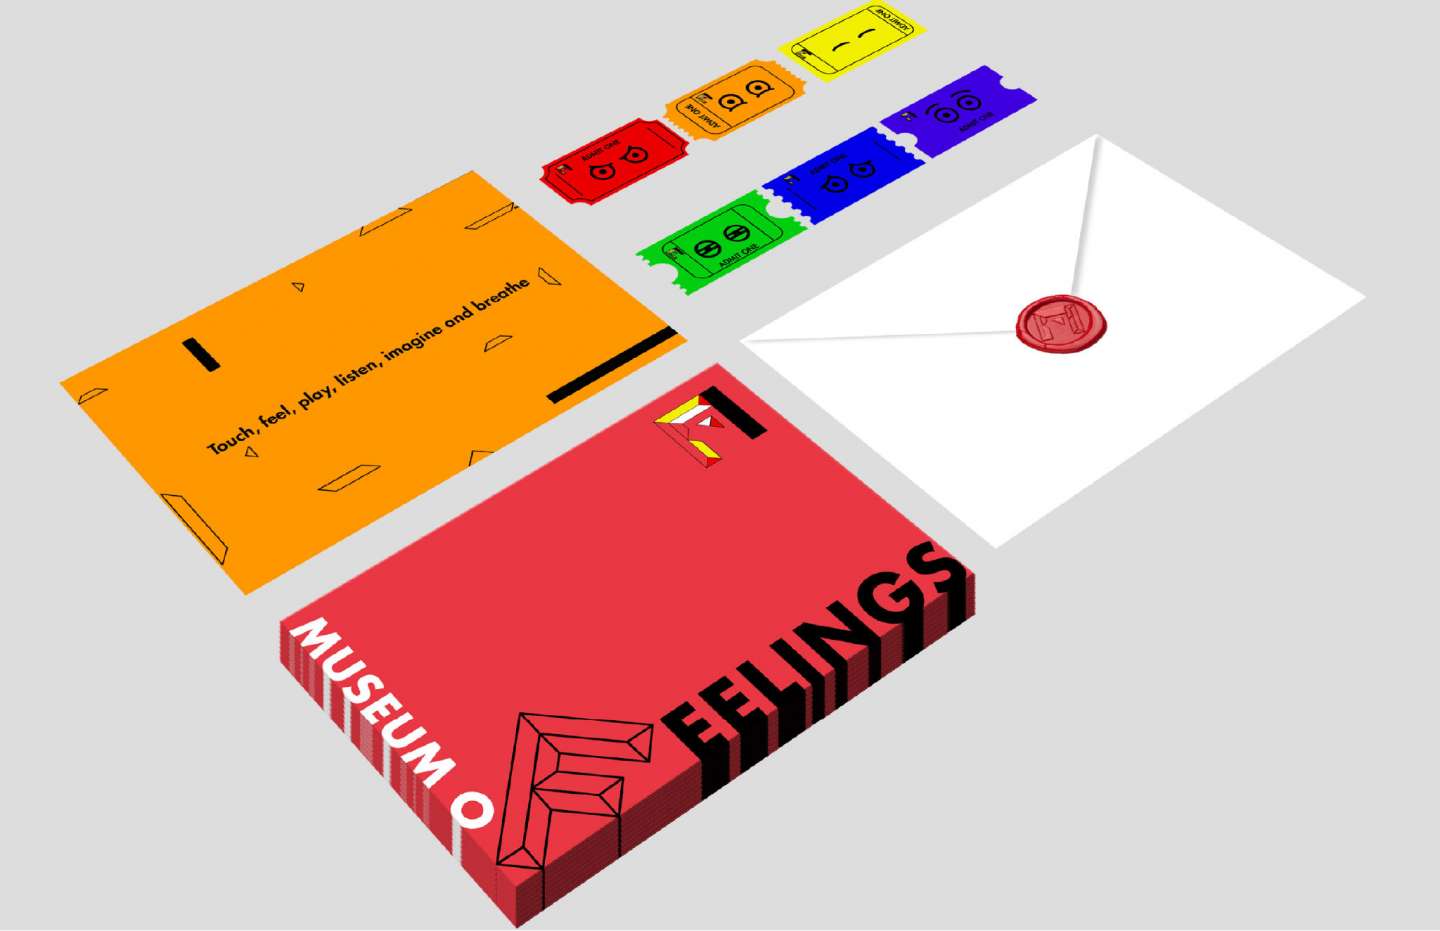 Museum of feelings' Design